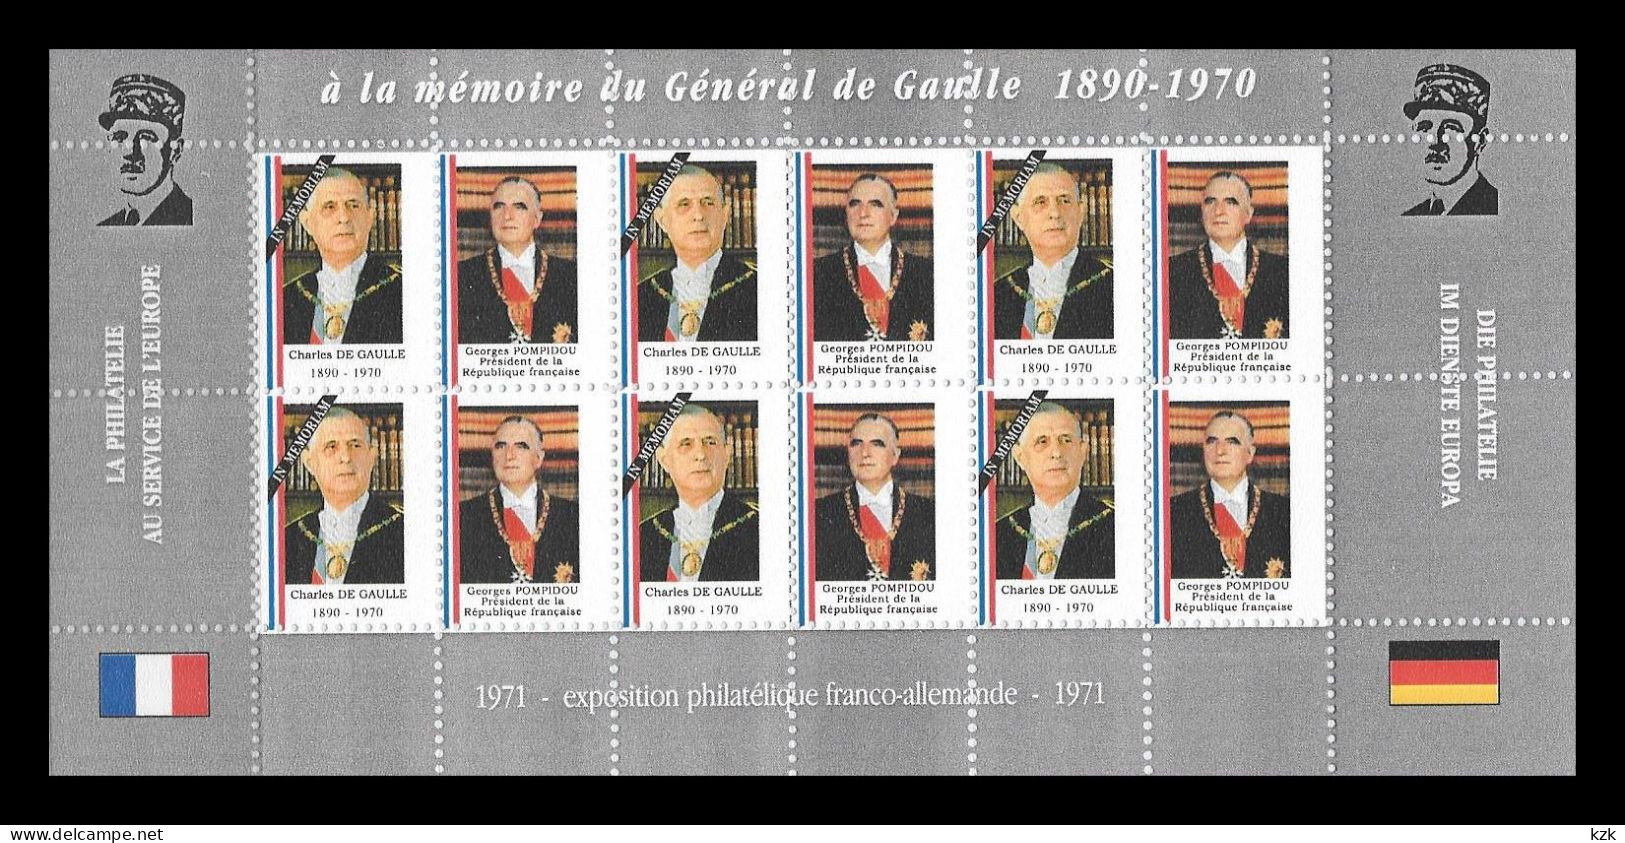 27	43 200		EUROPA - De Gaulle (General)